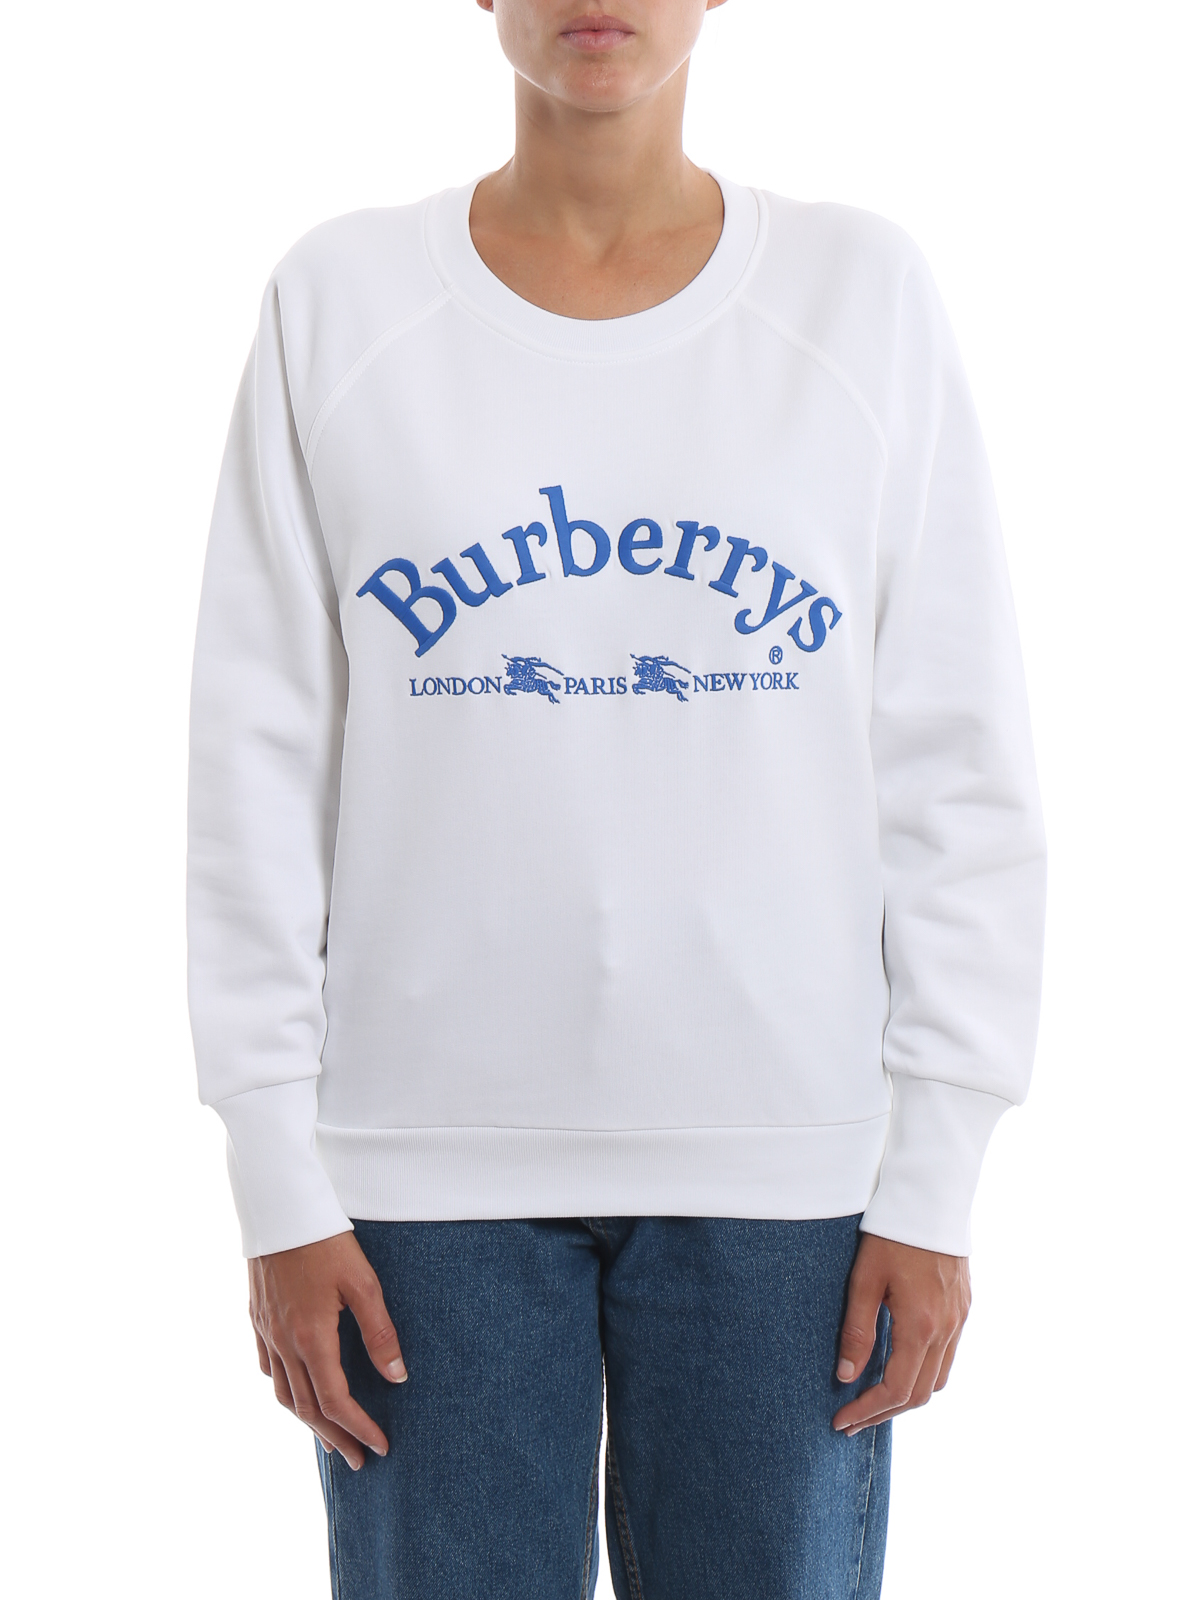 burberry logo sweatshirt